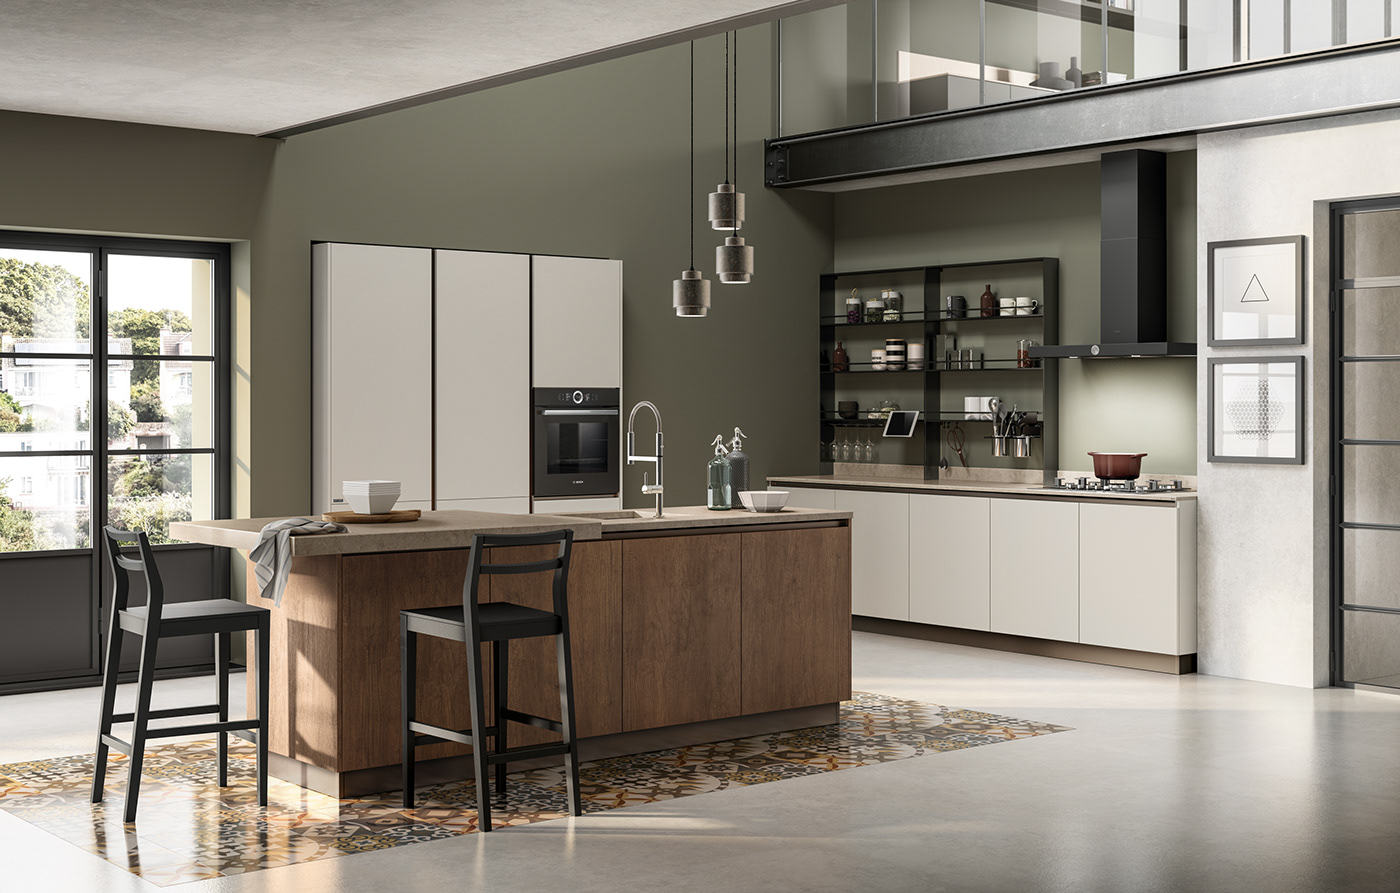 design kitchen inspiration 2020 new 2020 Behance Interior rendering Render maverickrender industrial